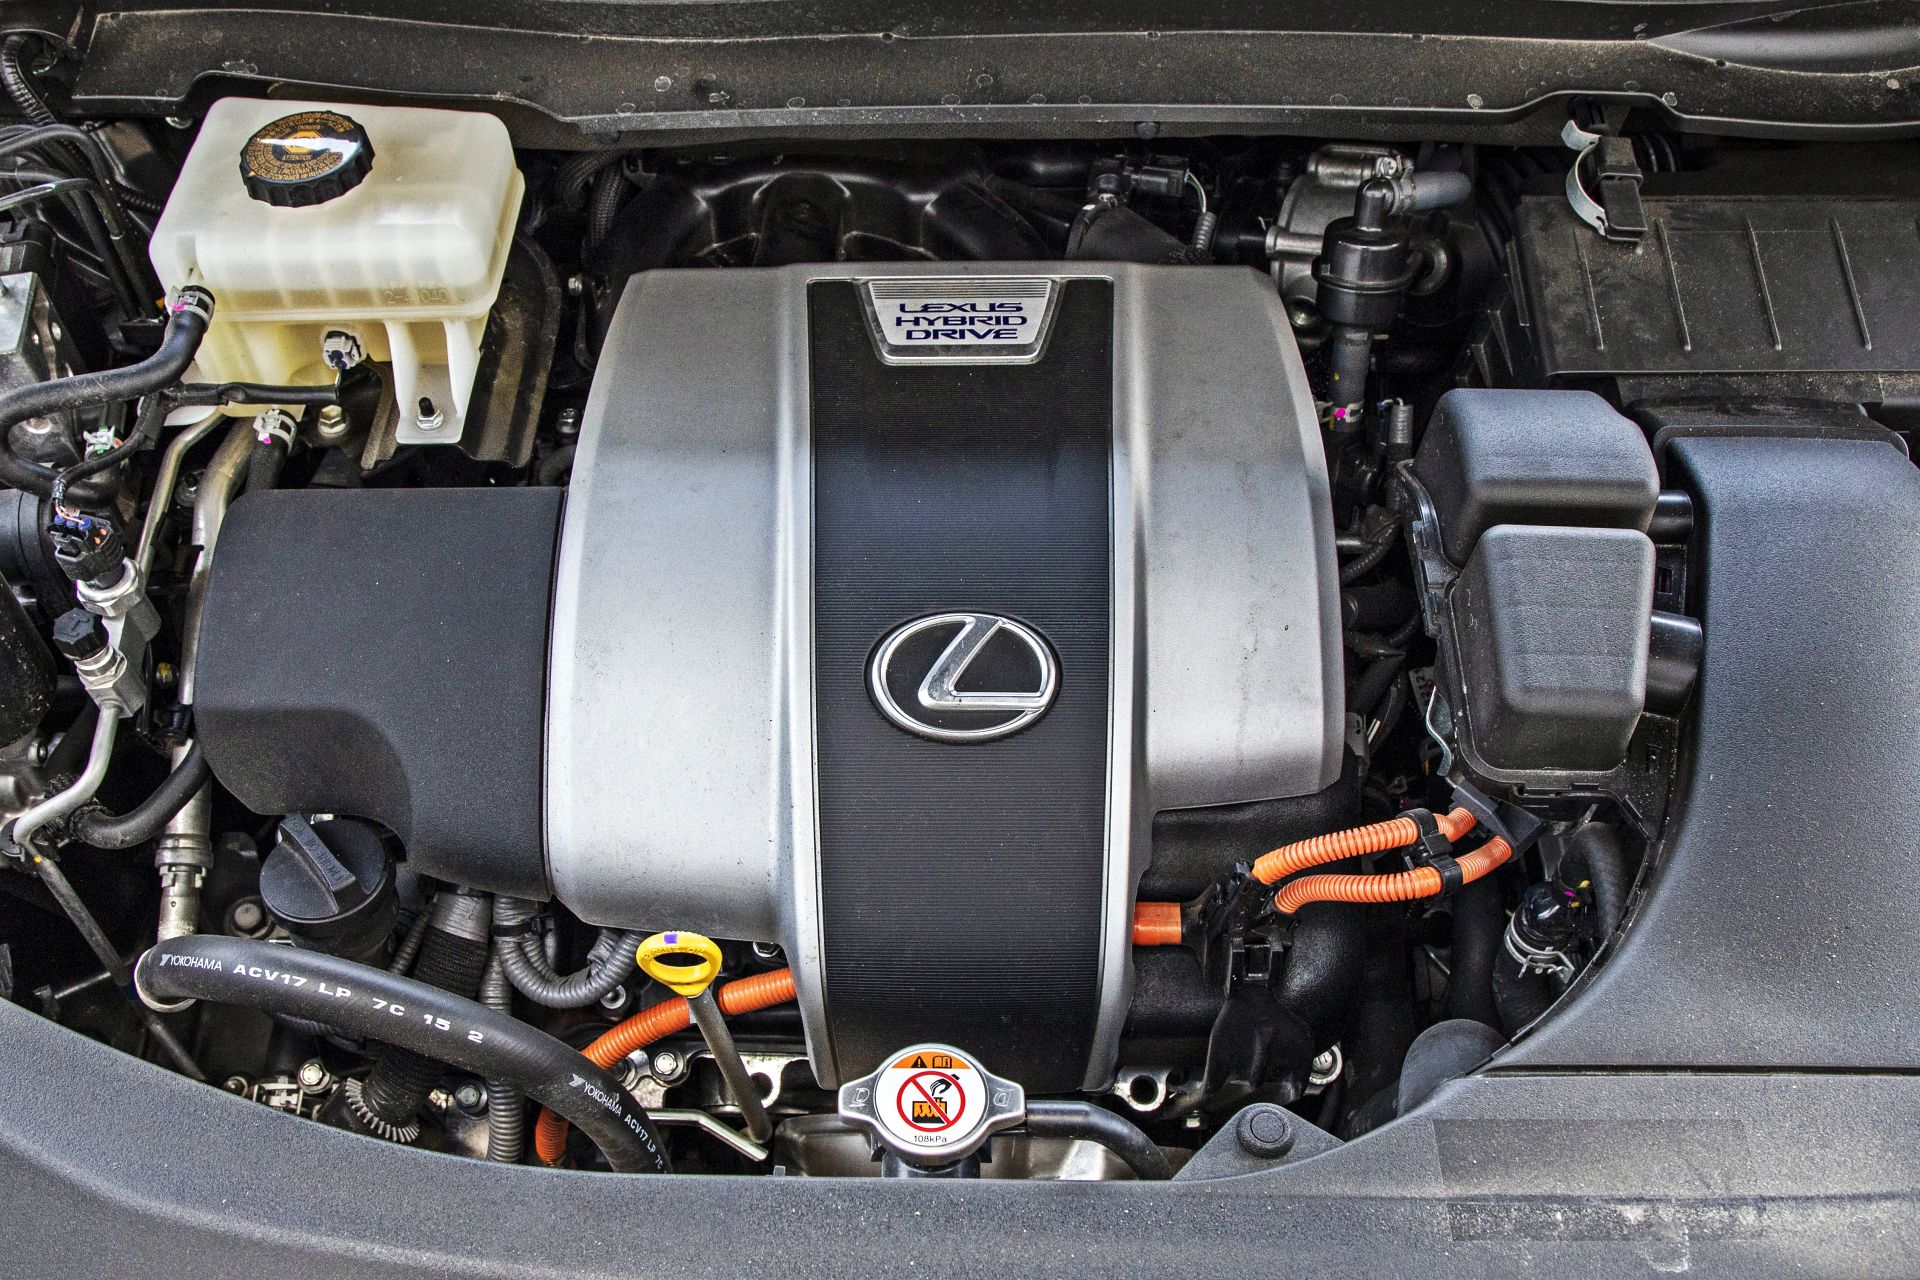 Lexus RX (2021). Opis wersji i cennik